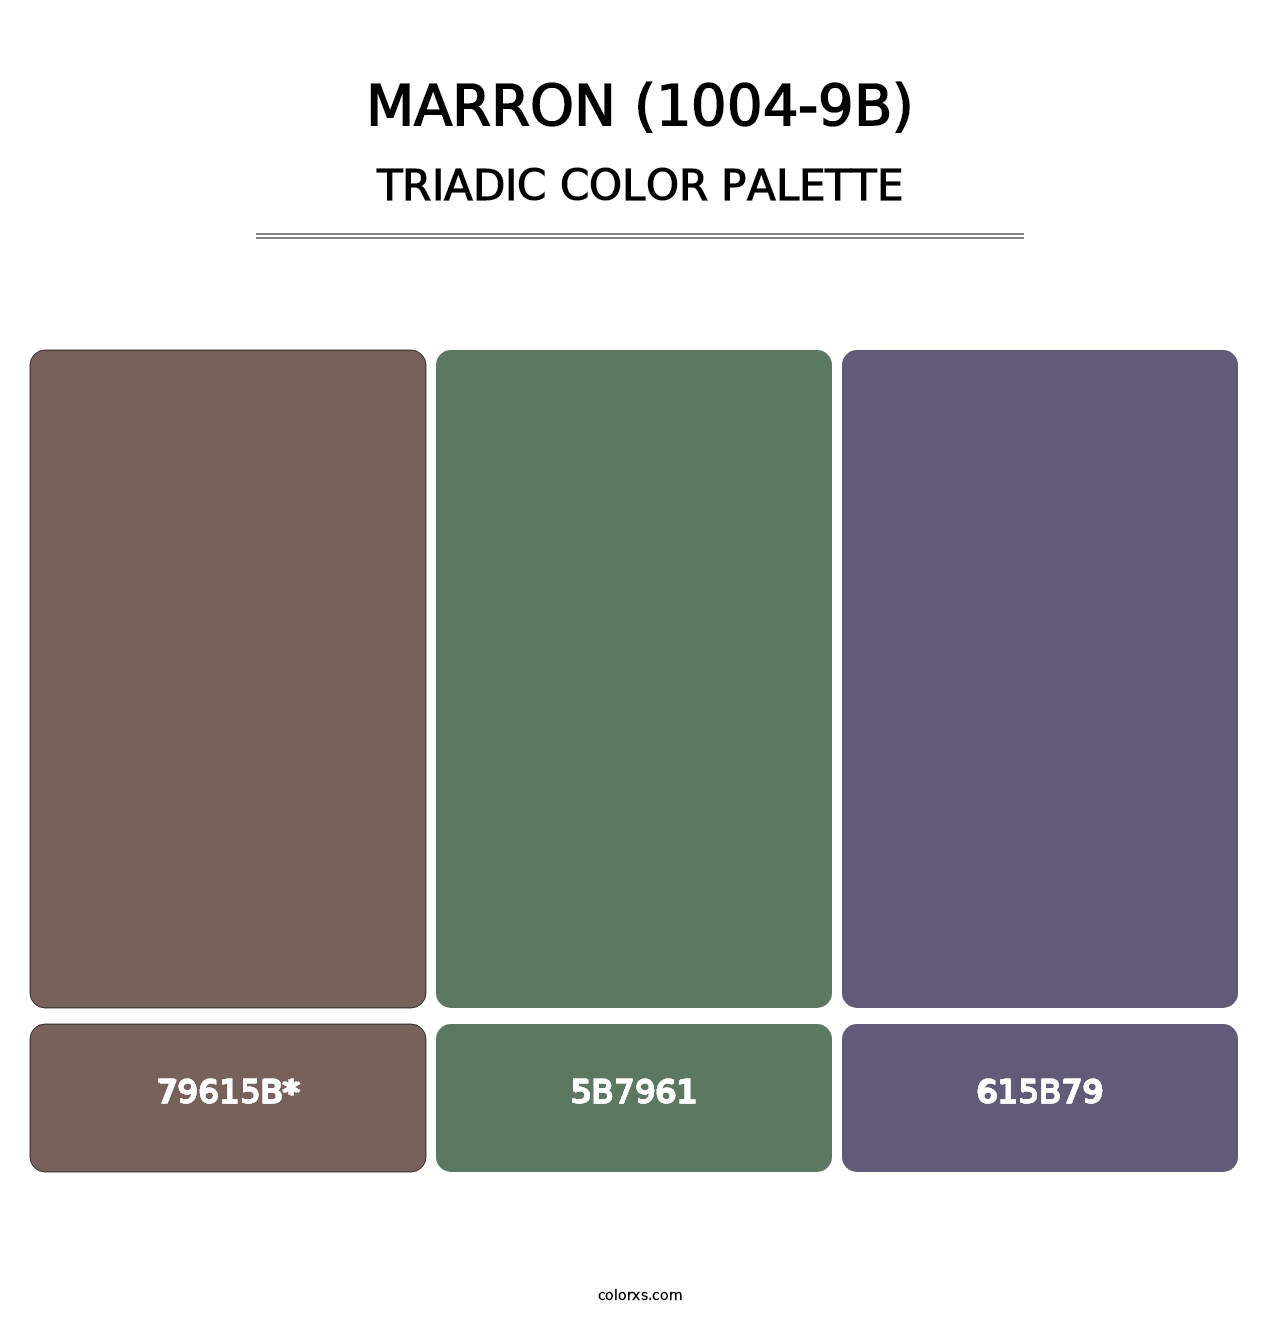 Marron (1004-9B) - Triadic Color Palette